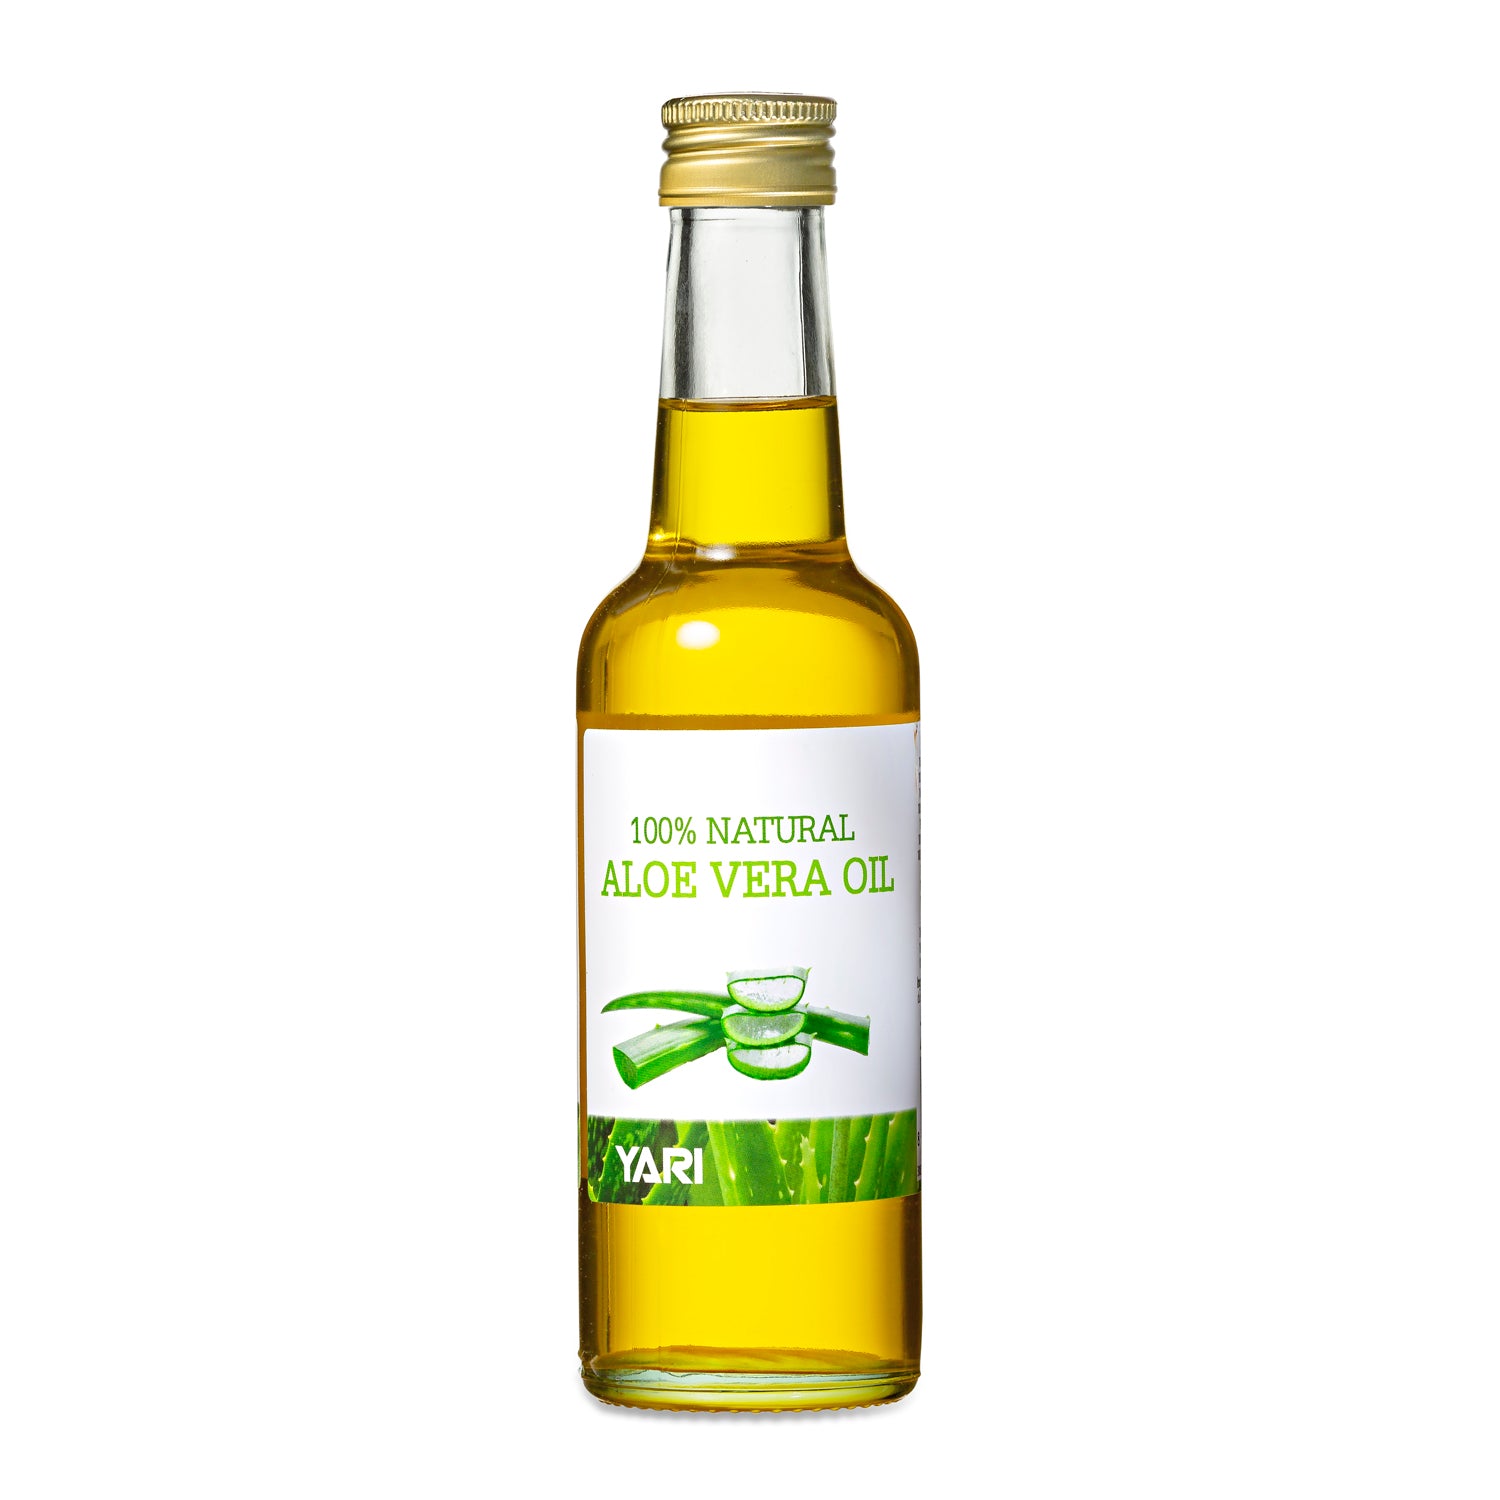 Yari - 100% Natural Aloe Vera Oil 250ml